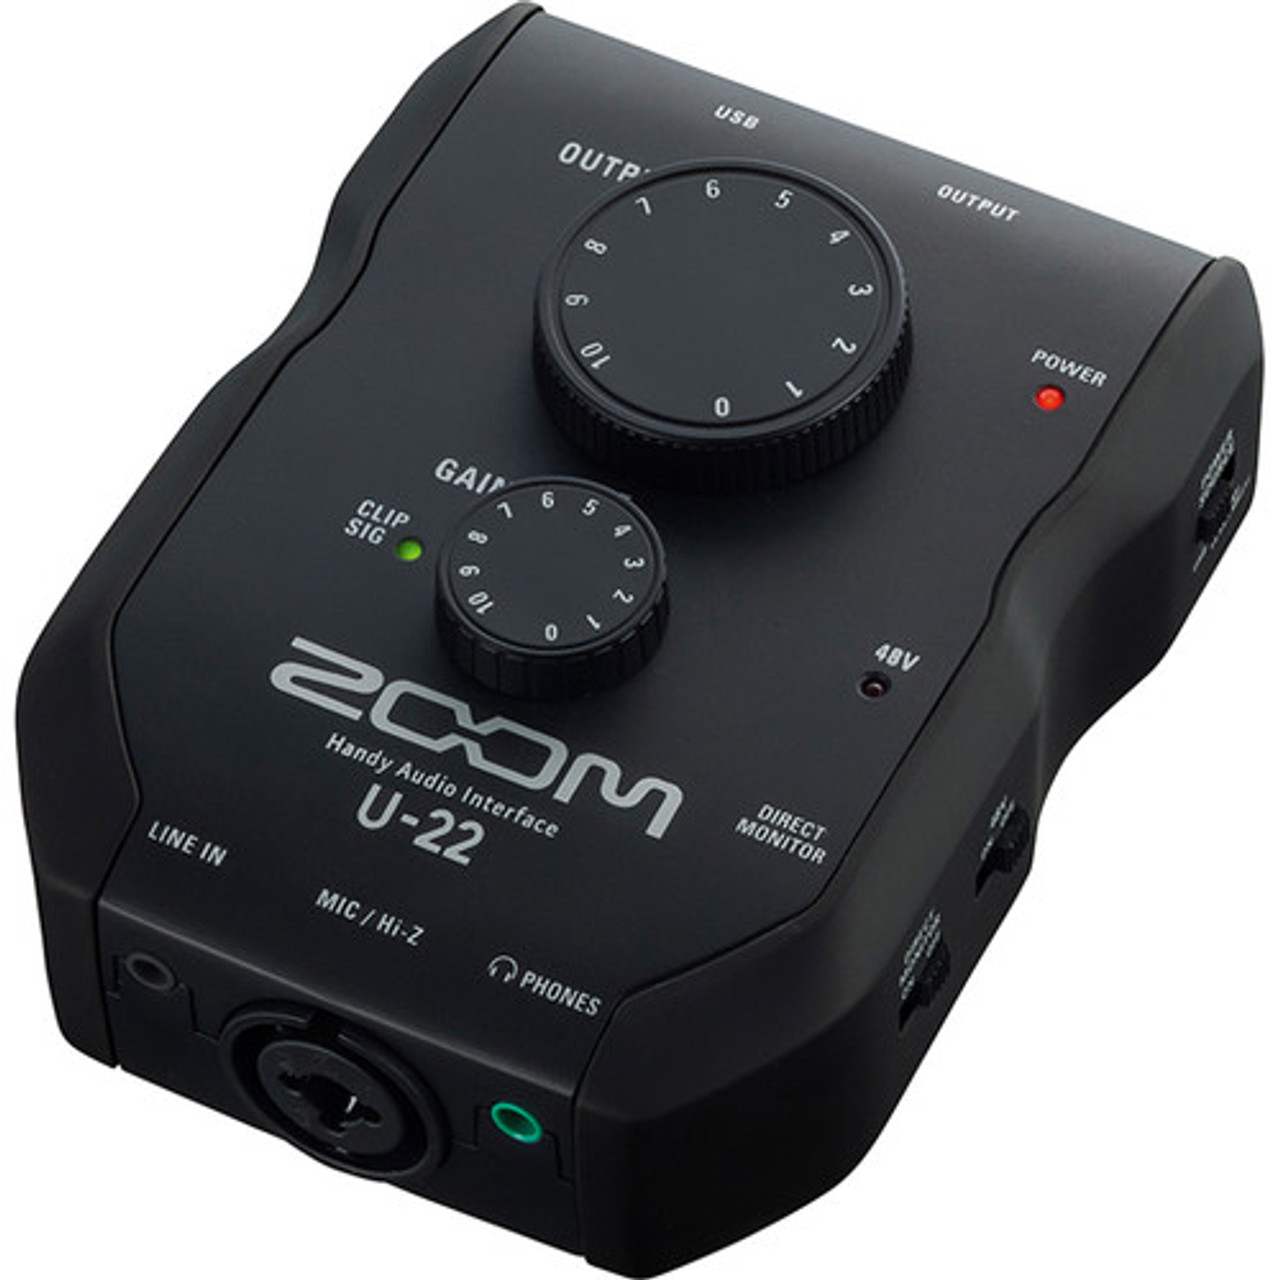 Zoom U-24 Handy Audio Interface, 2-channel Portable Usb Audio